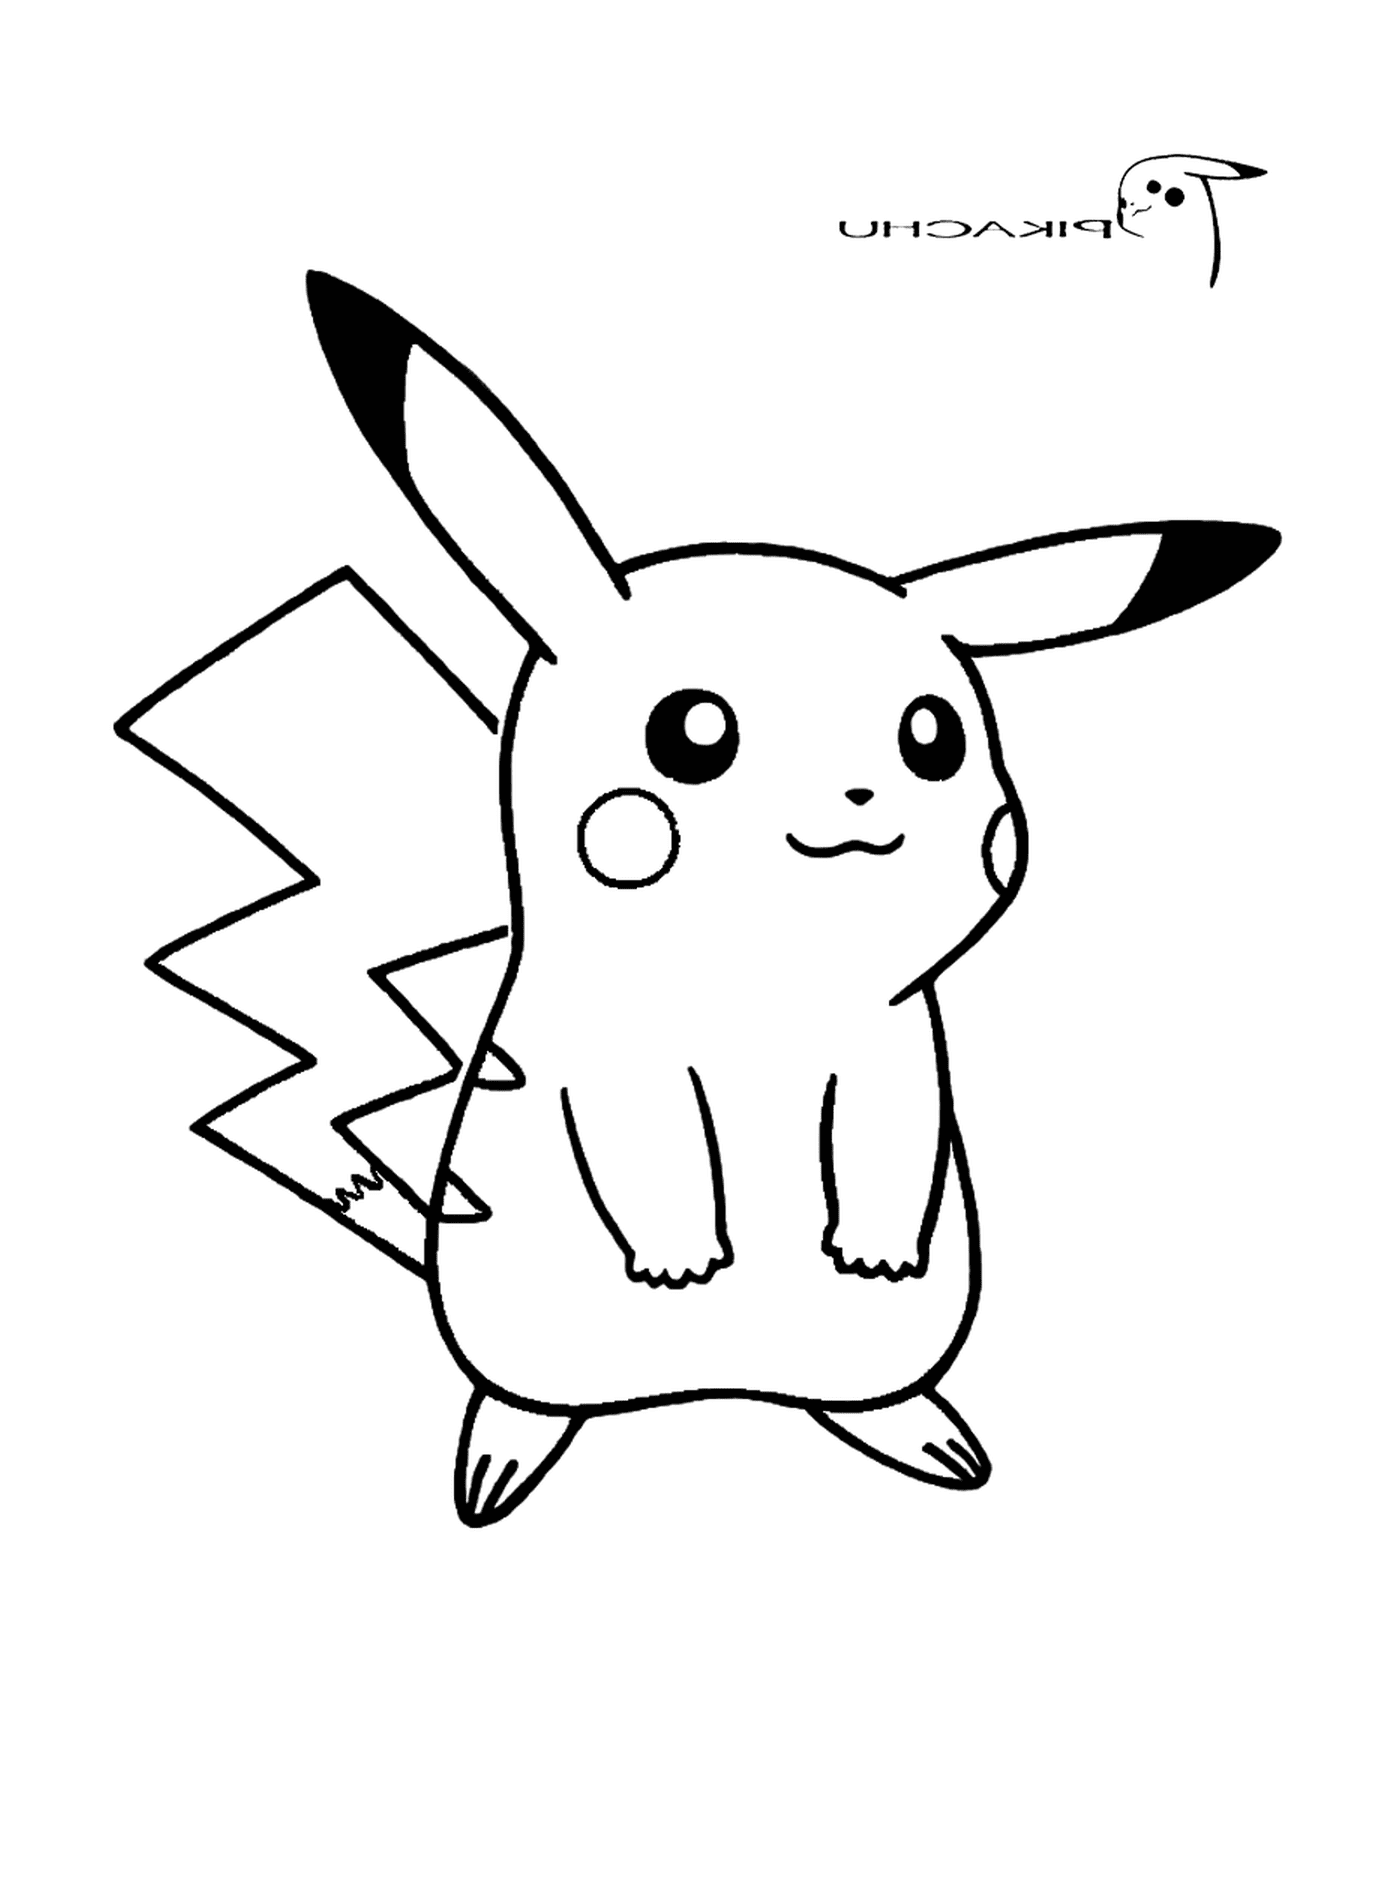  Pikachu bonito e jogador 